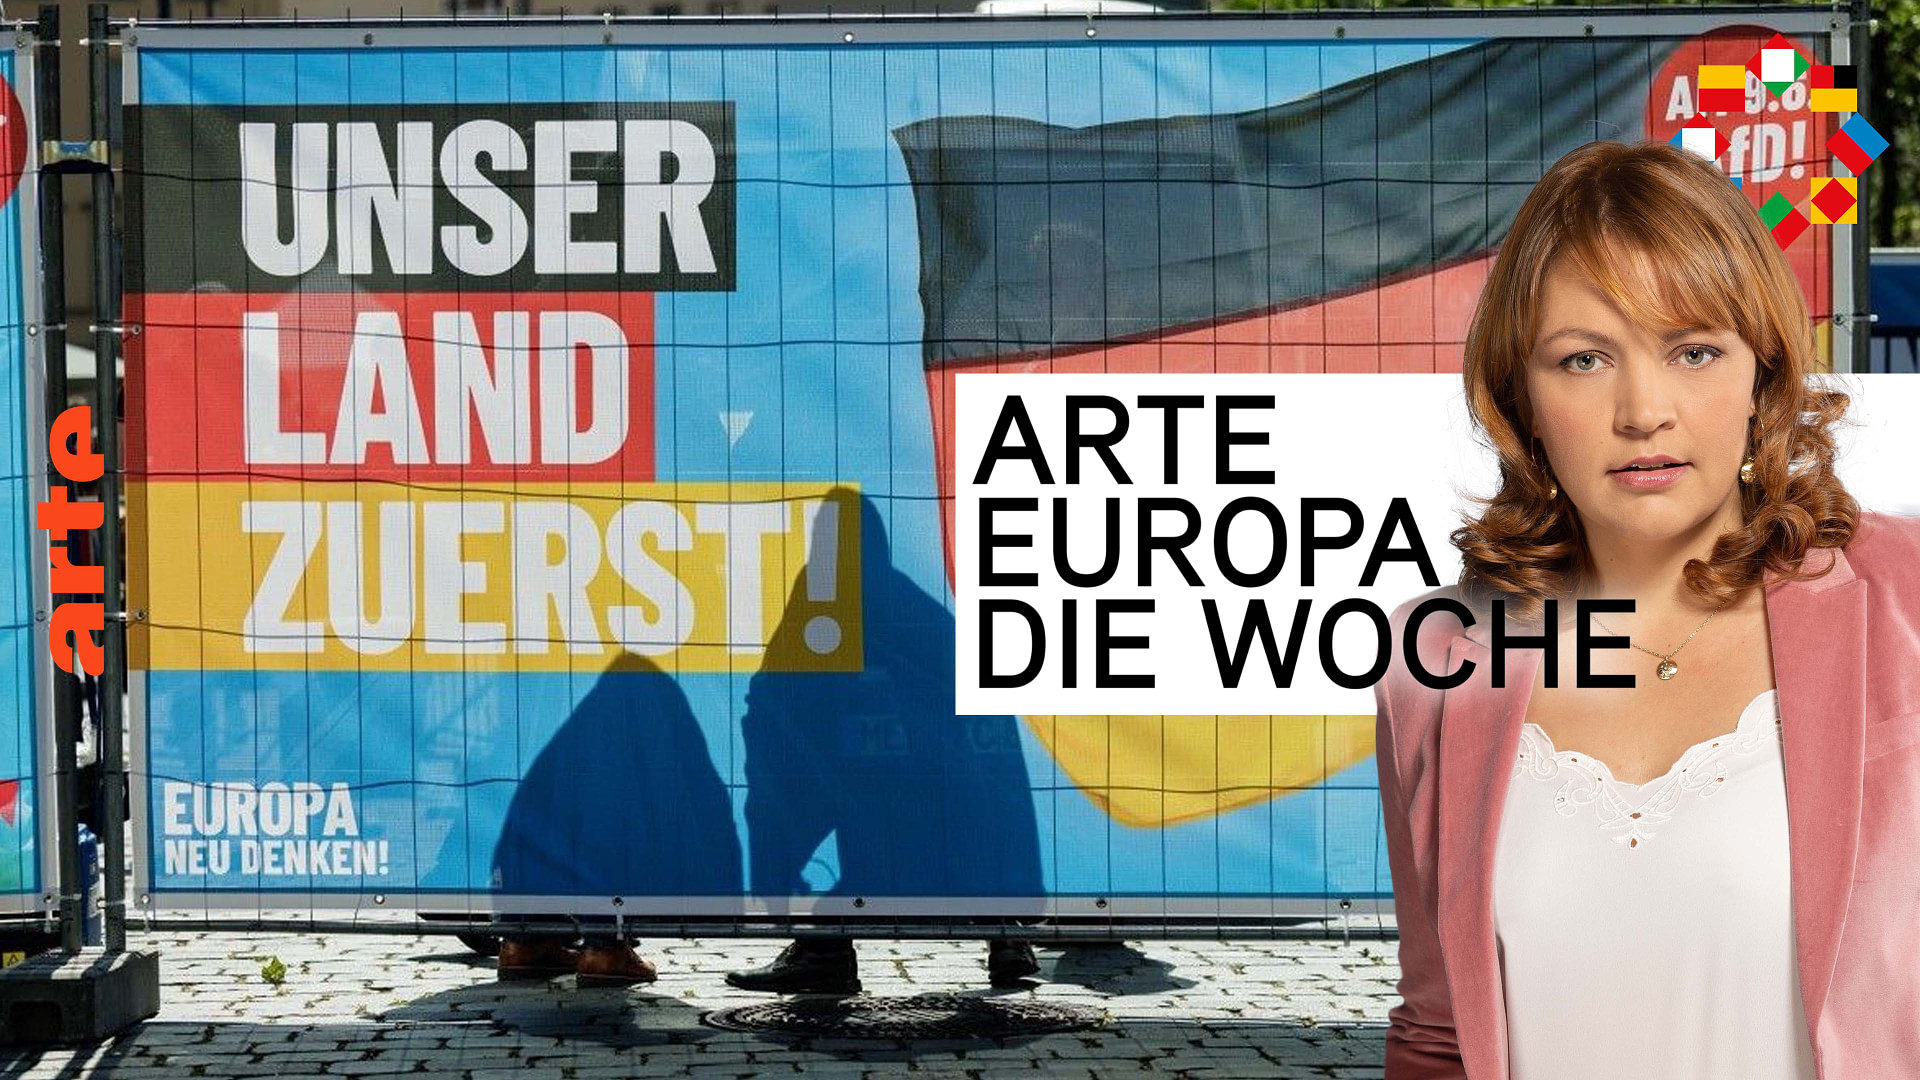 ARTE Europa - die Woche